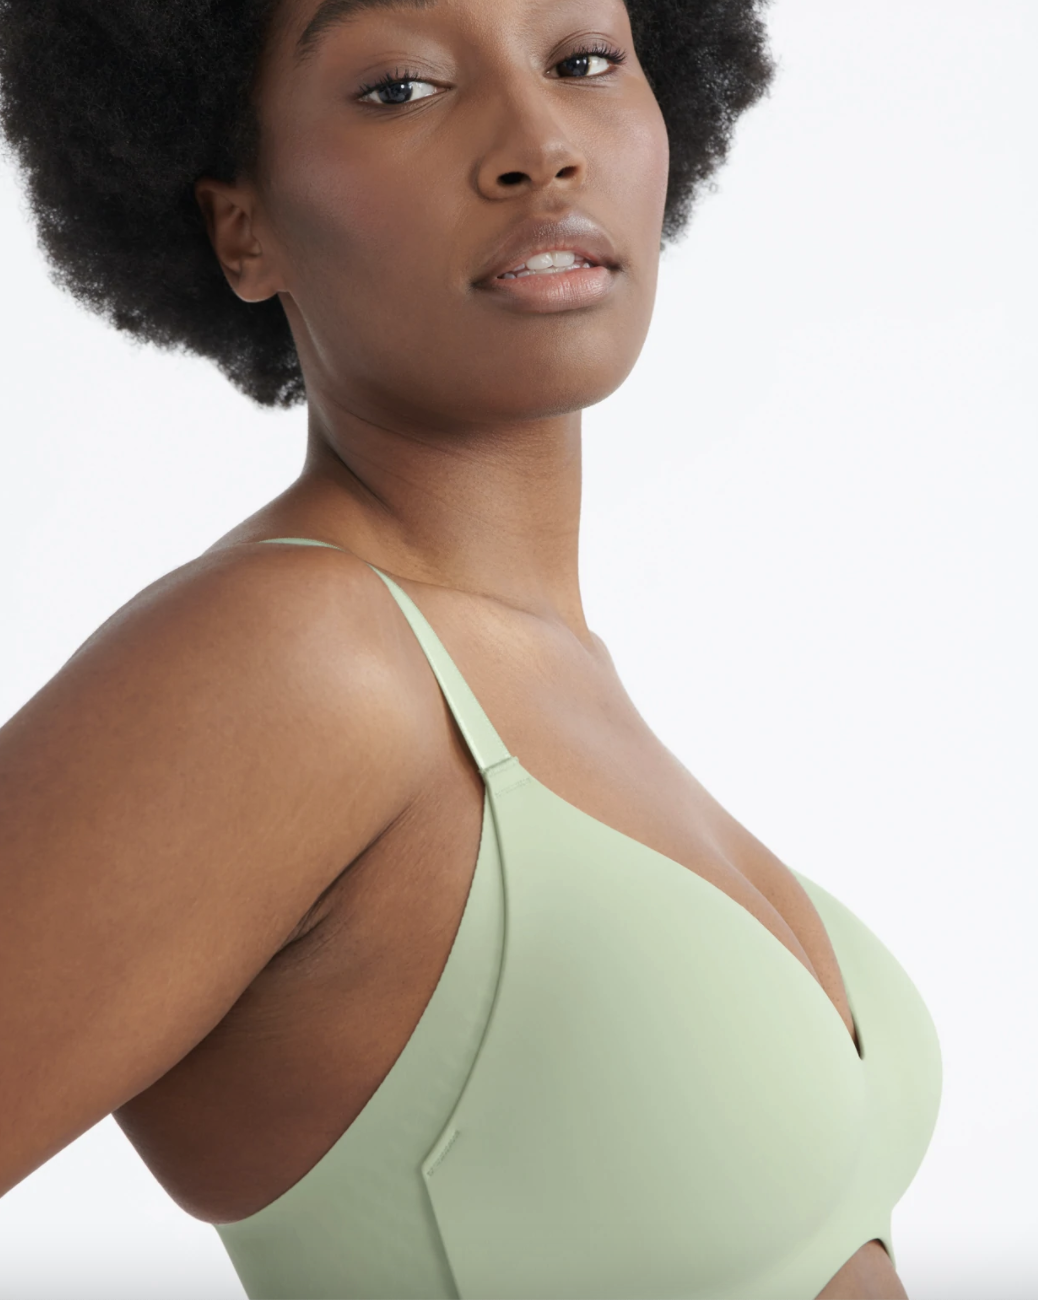 Light skin mature black women with large nipples